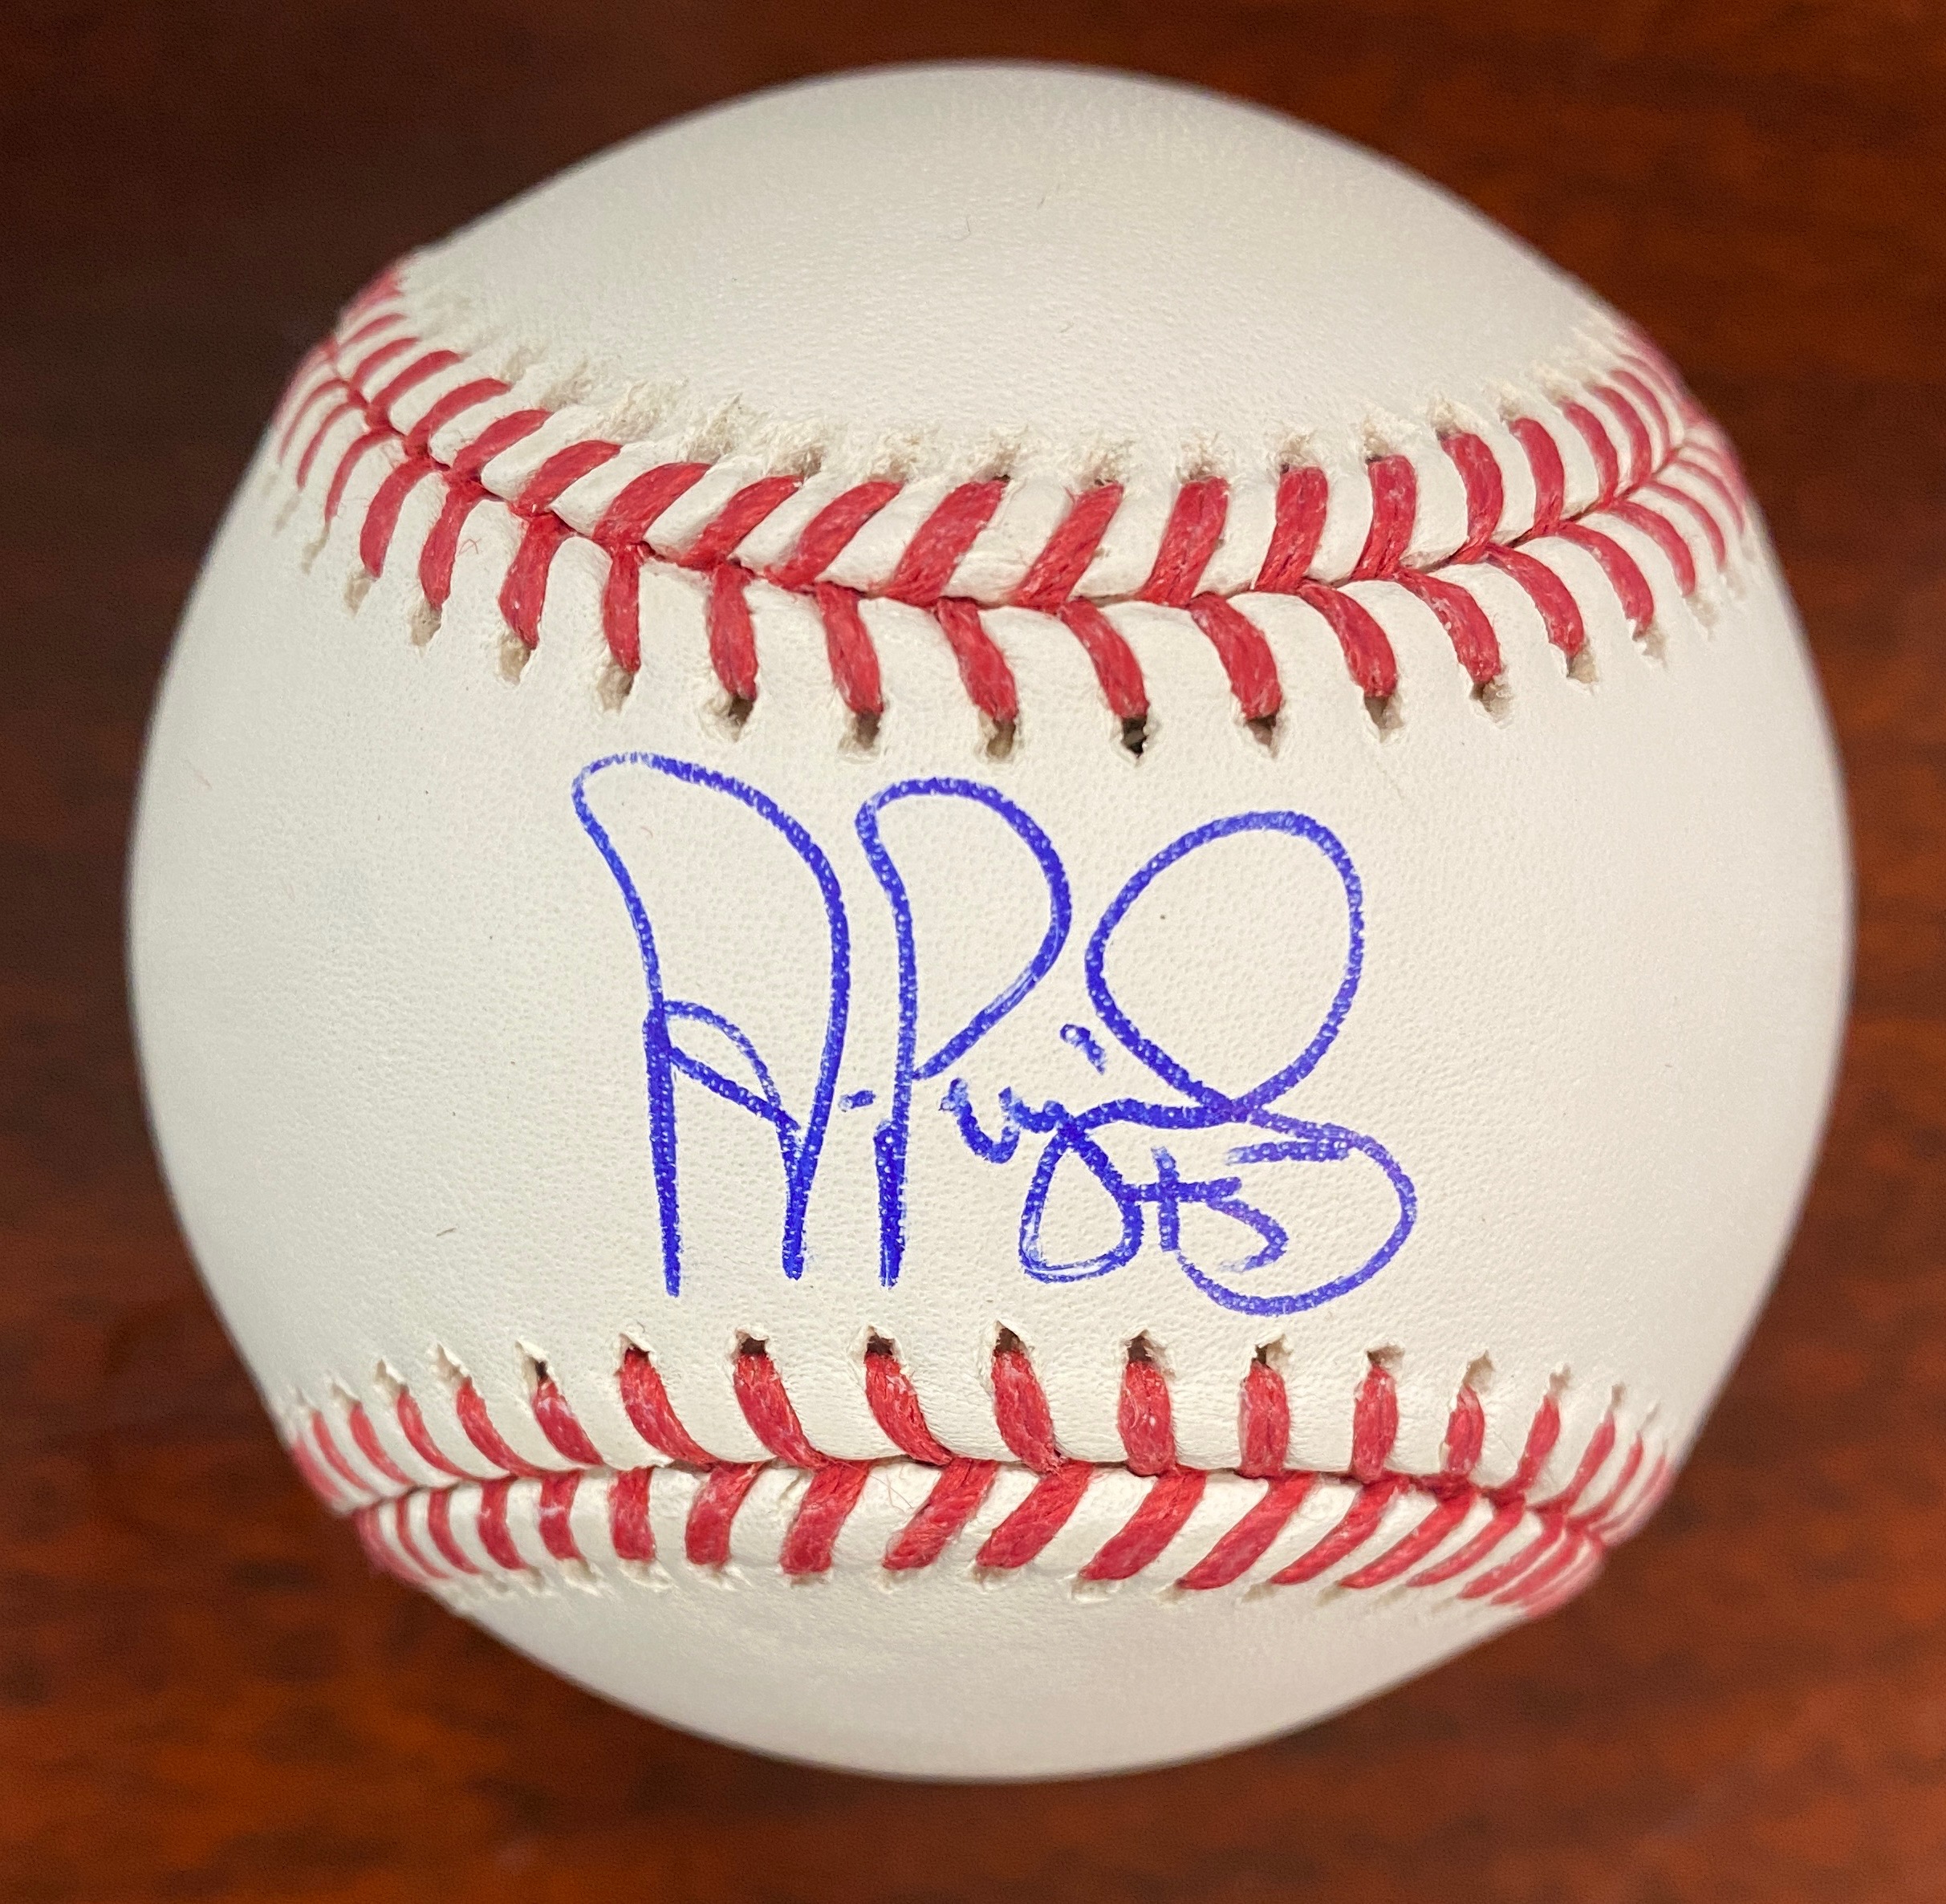 Albert Pujols 700 HR Signed Baseball - Beckett Authentication